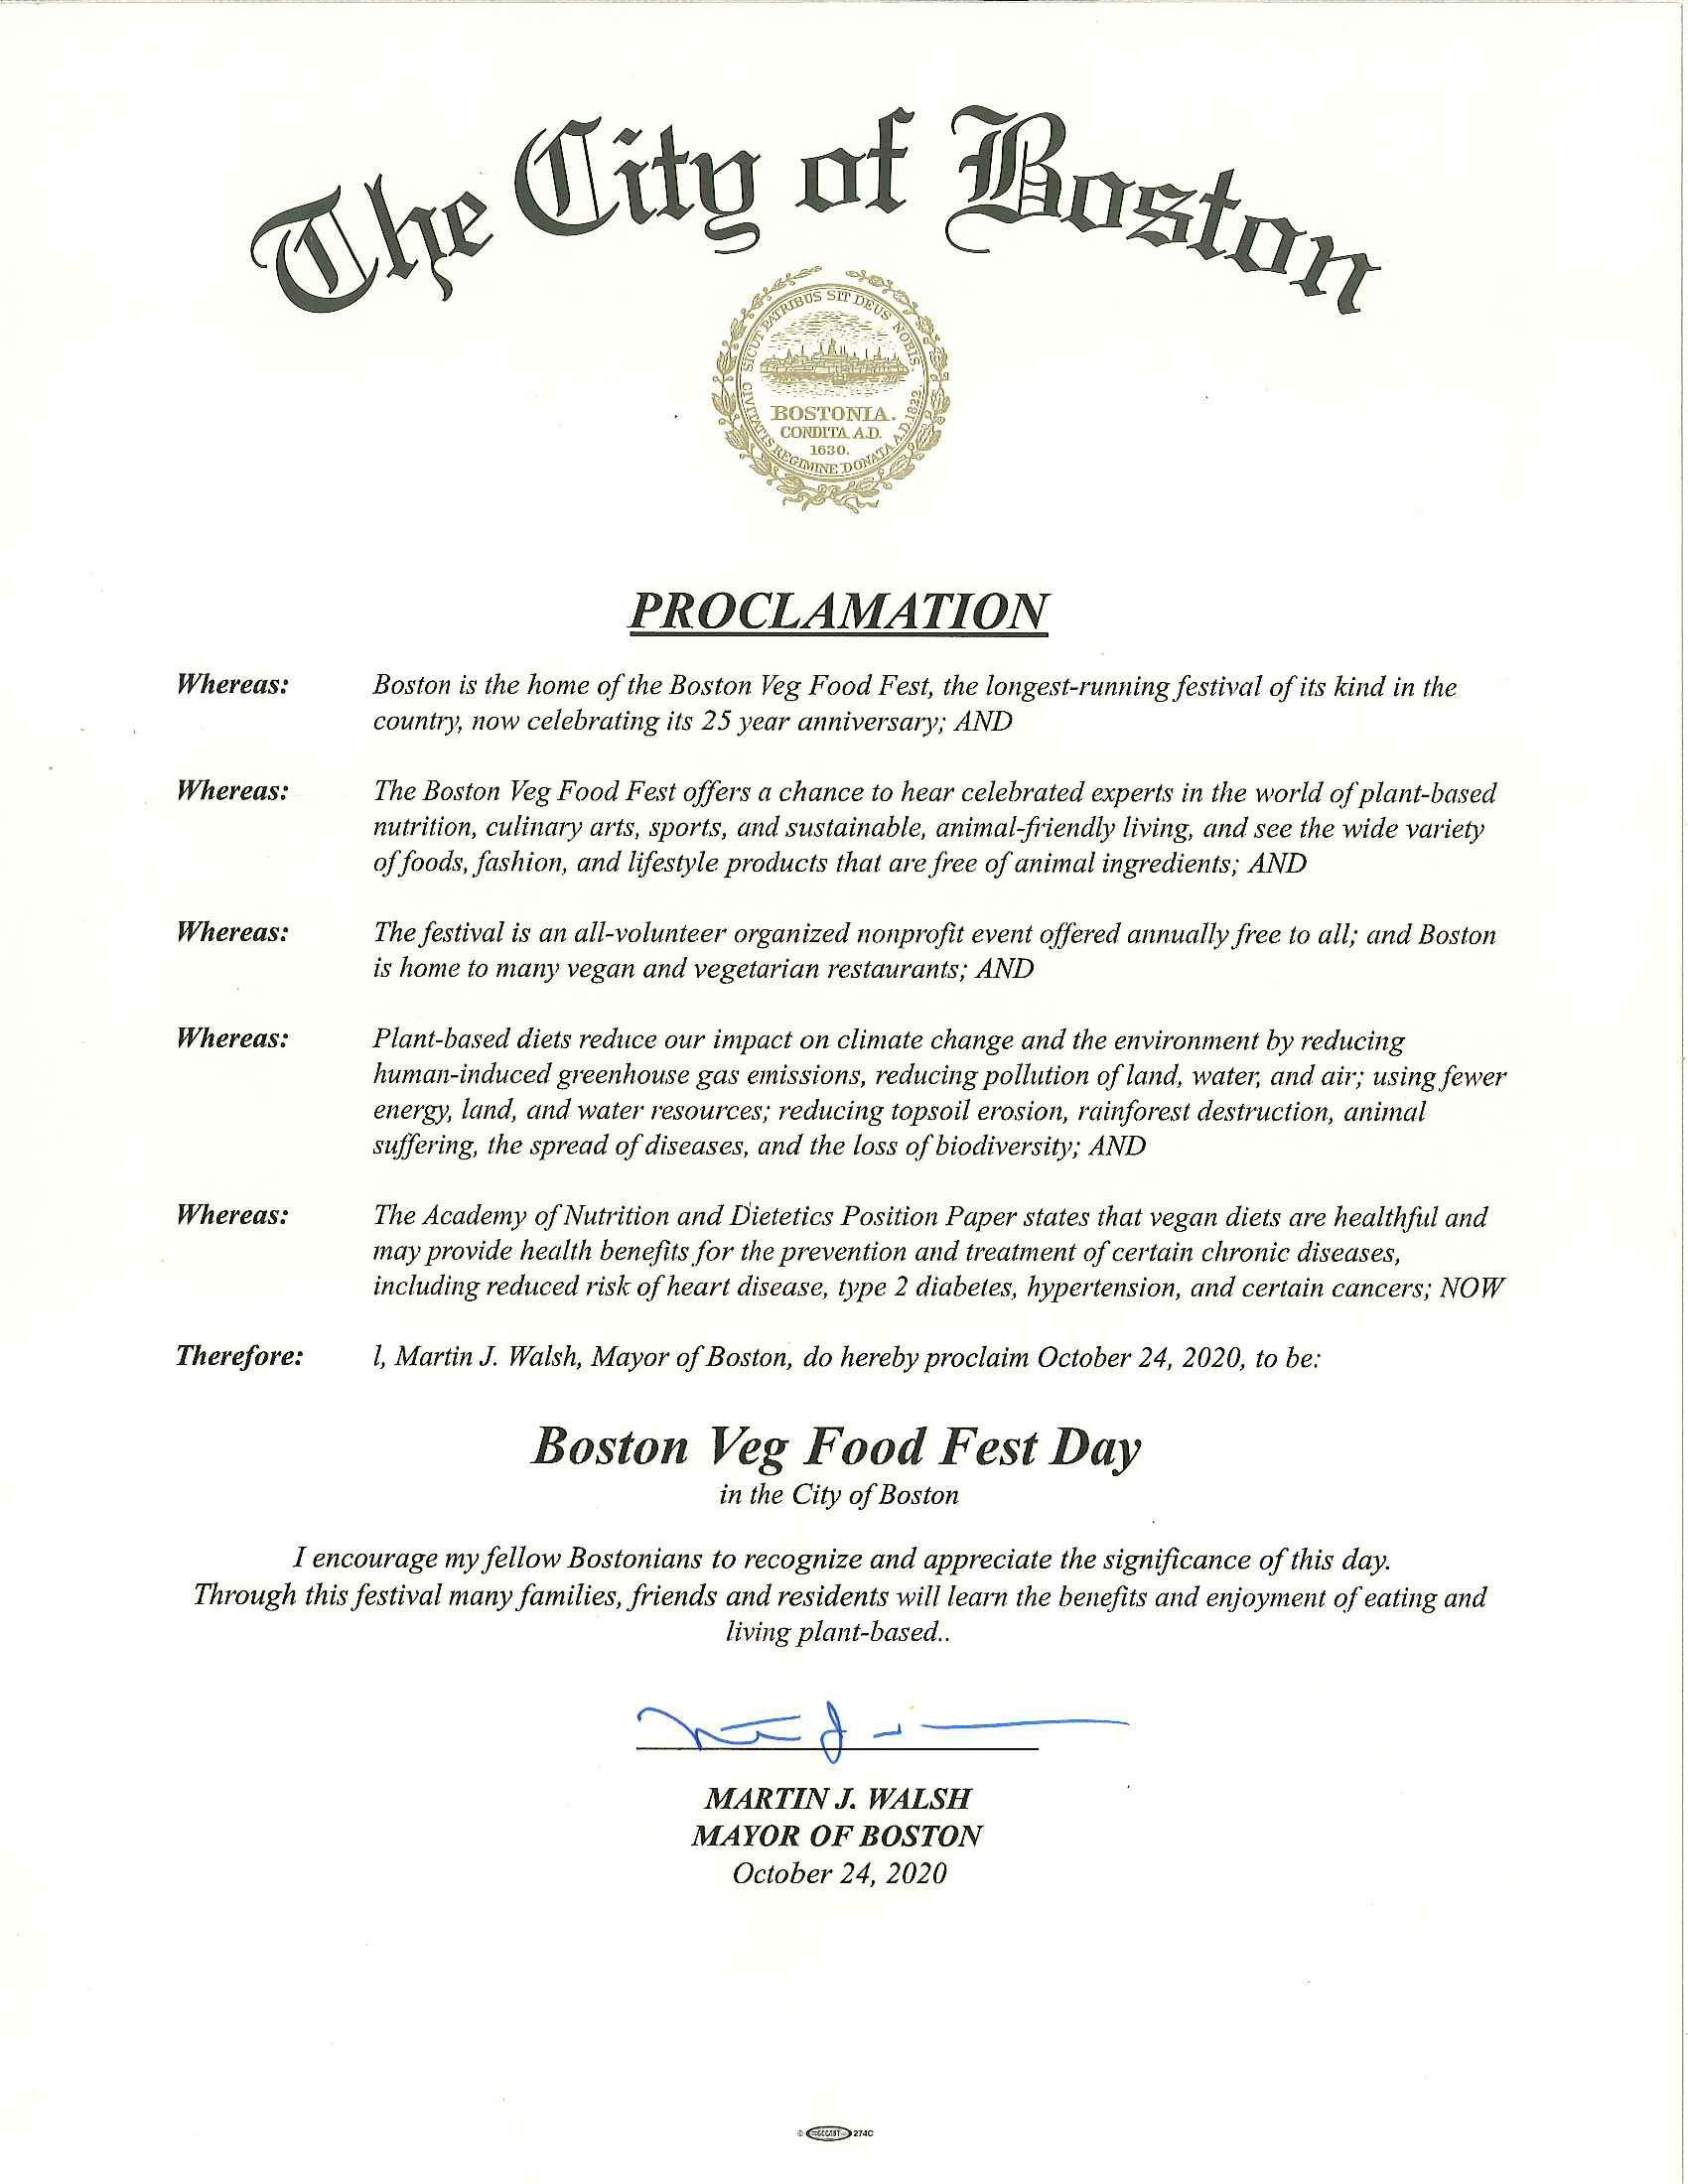 Cityof Boston Proclamation document, full text below image